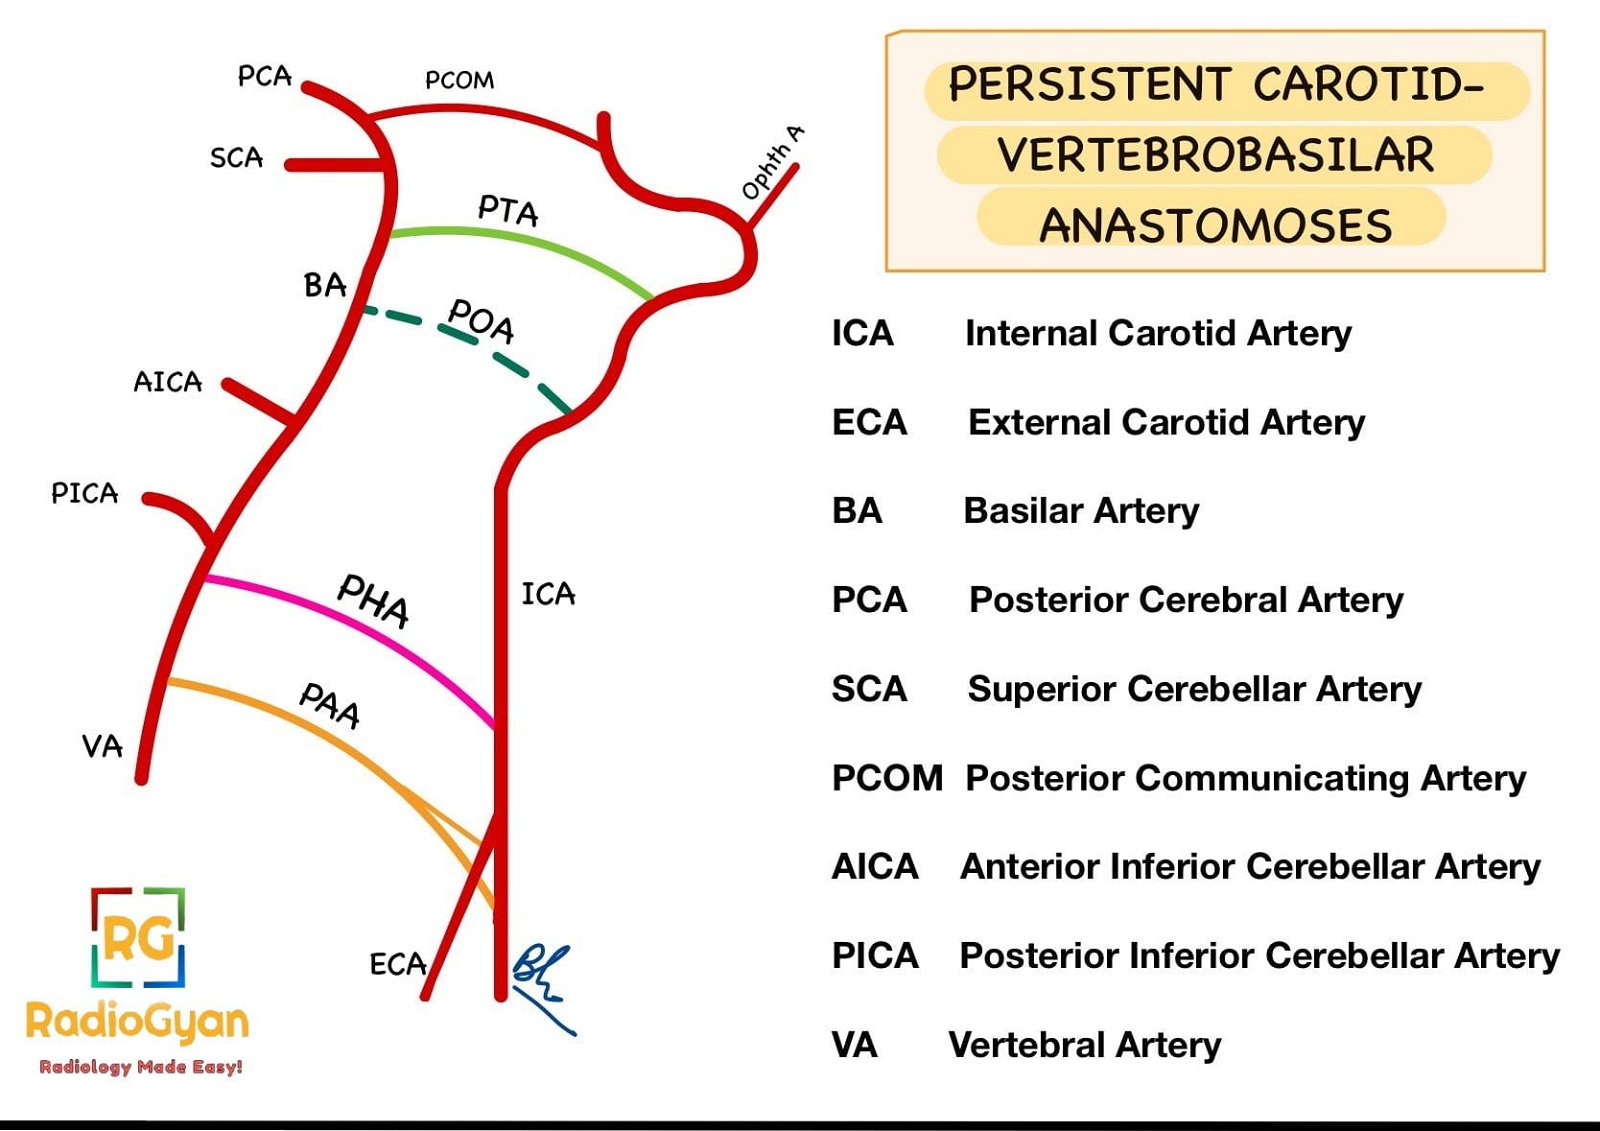 Illustration showing persistent carotid-vertebrobasilar anastomoses